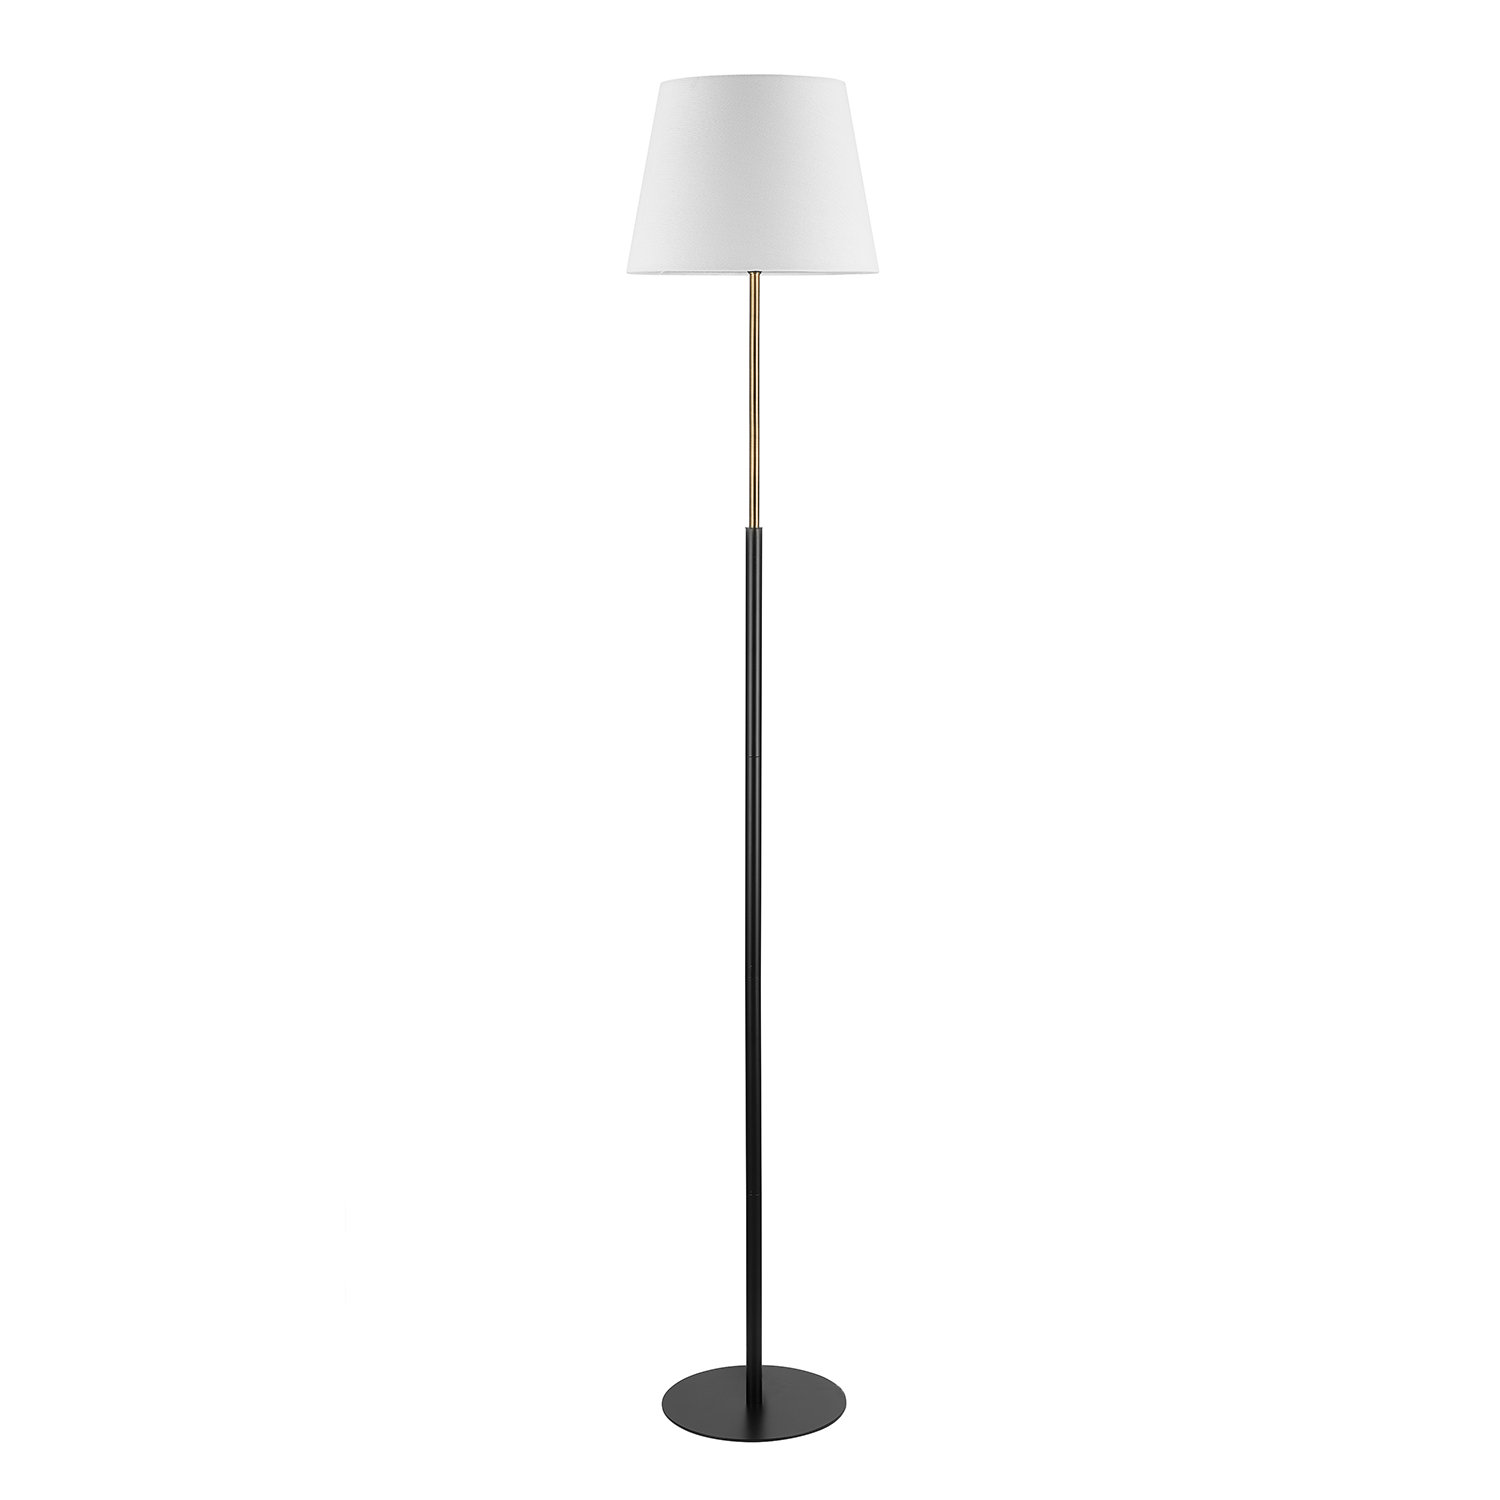 OttLite 18w Floor Lamp with Wheels - Home, Office, Bedroom, or Reading